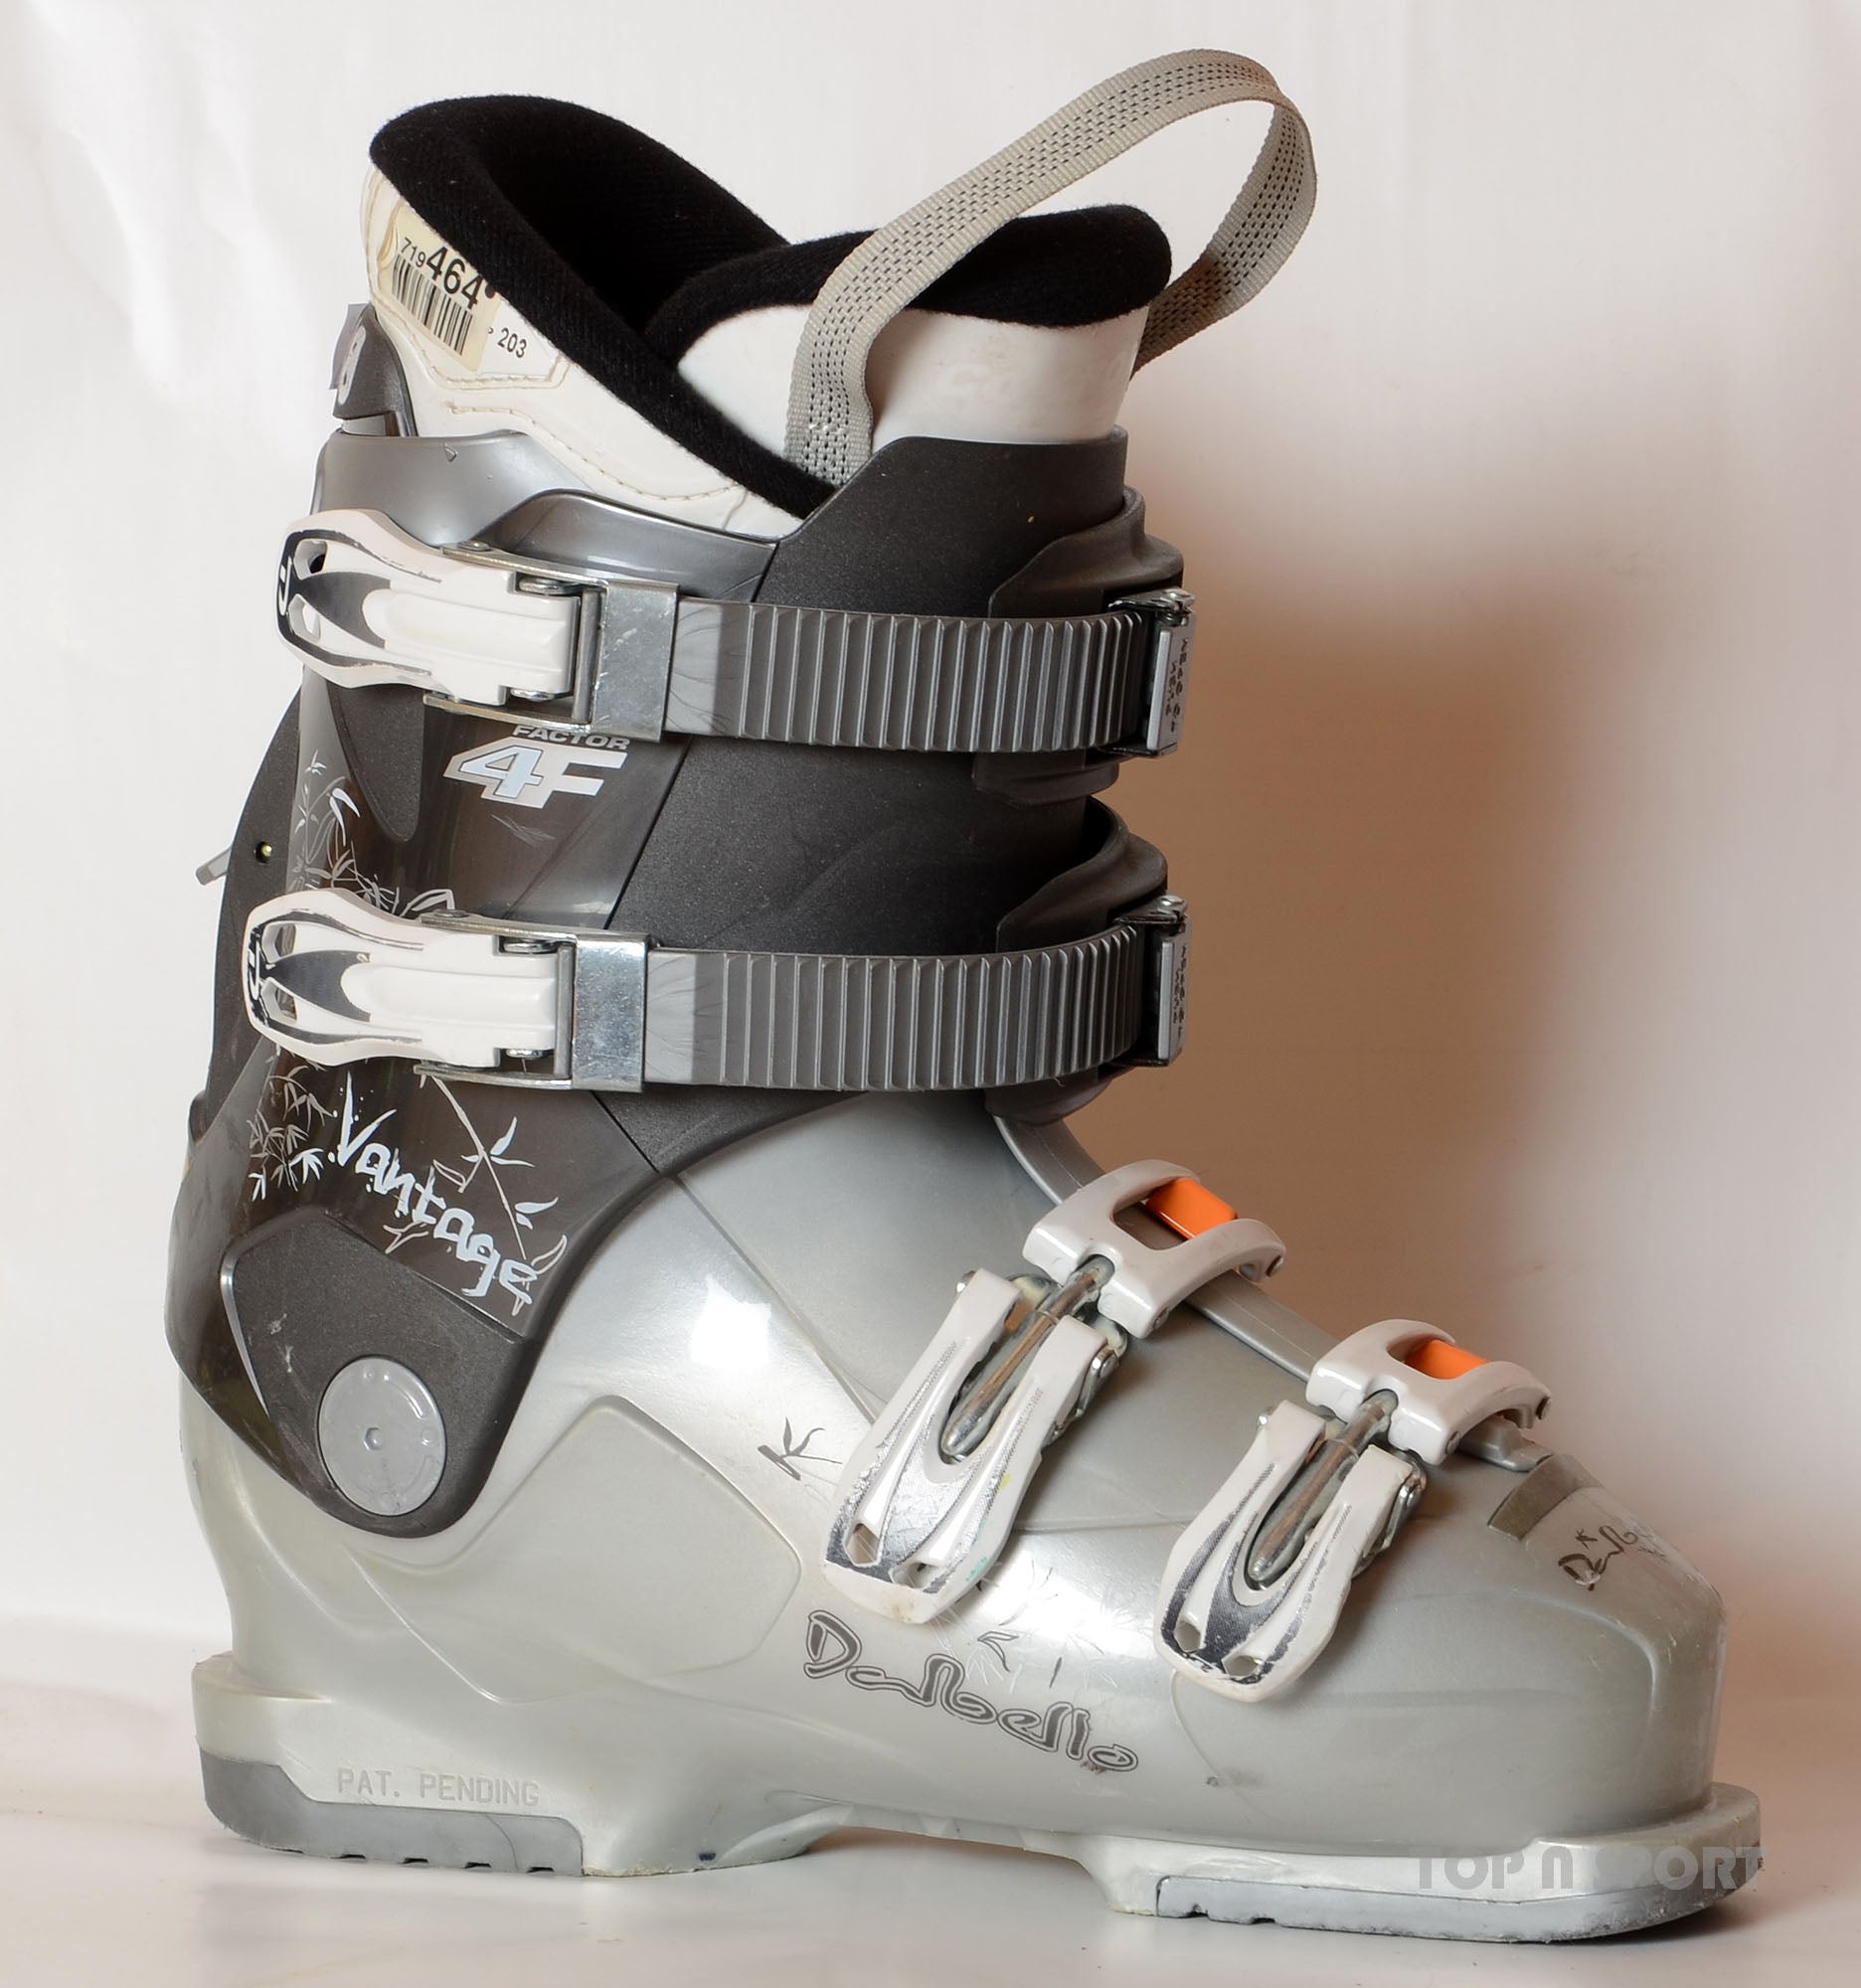 Chaussure ski occasion wed'ze alu 10 noir Qualité A 44/28.5MP 